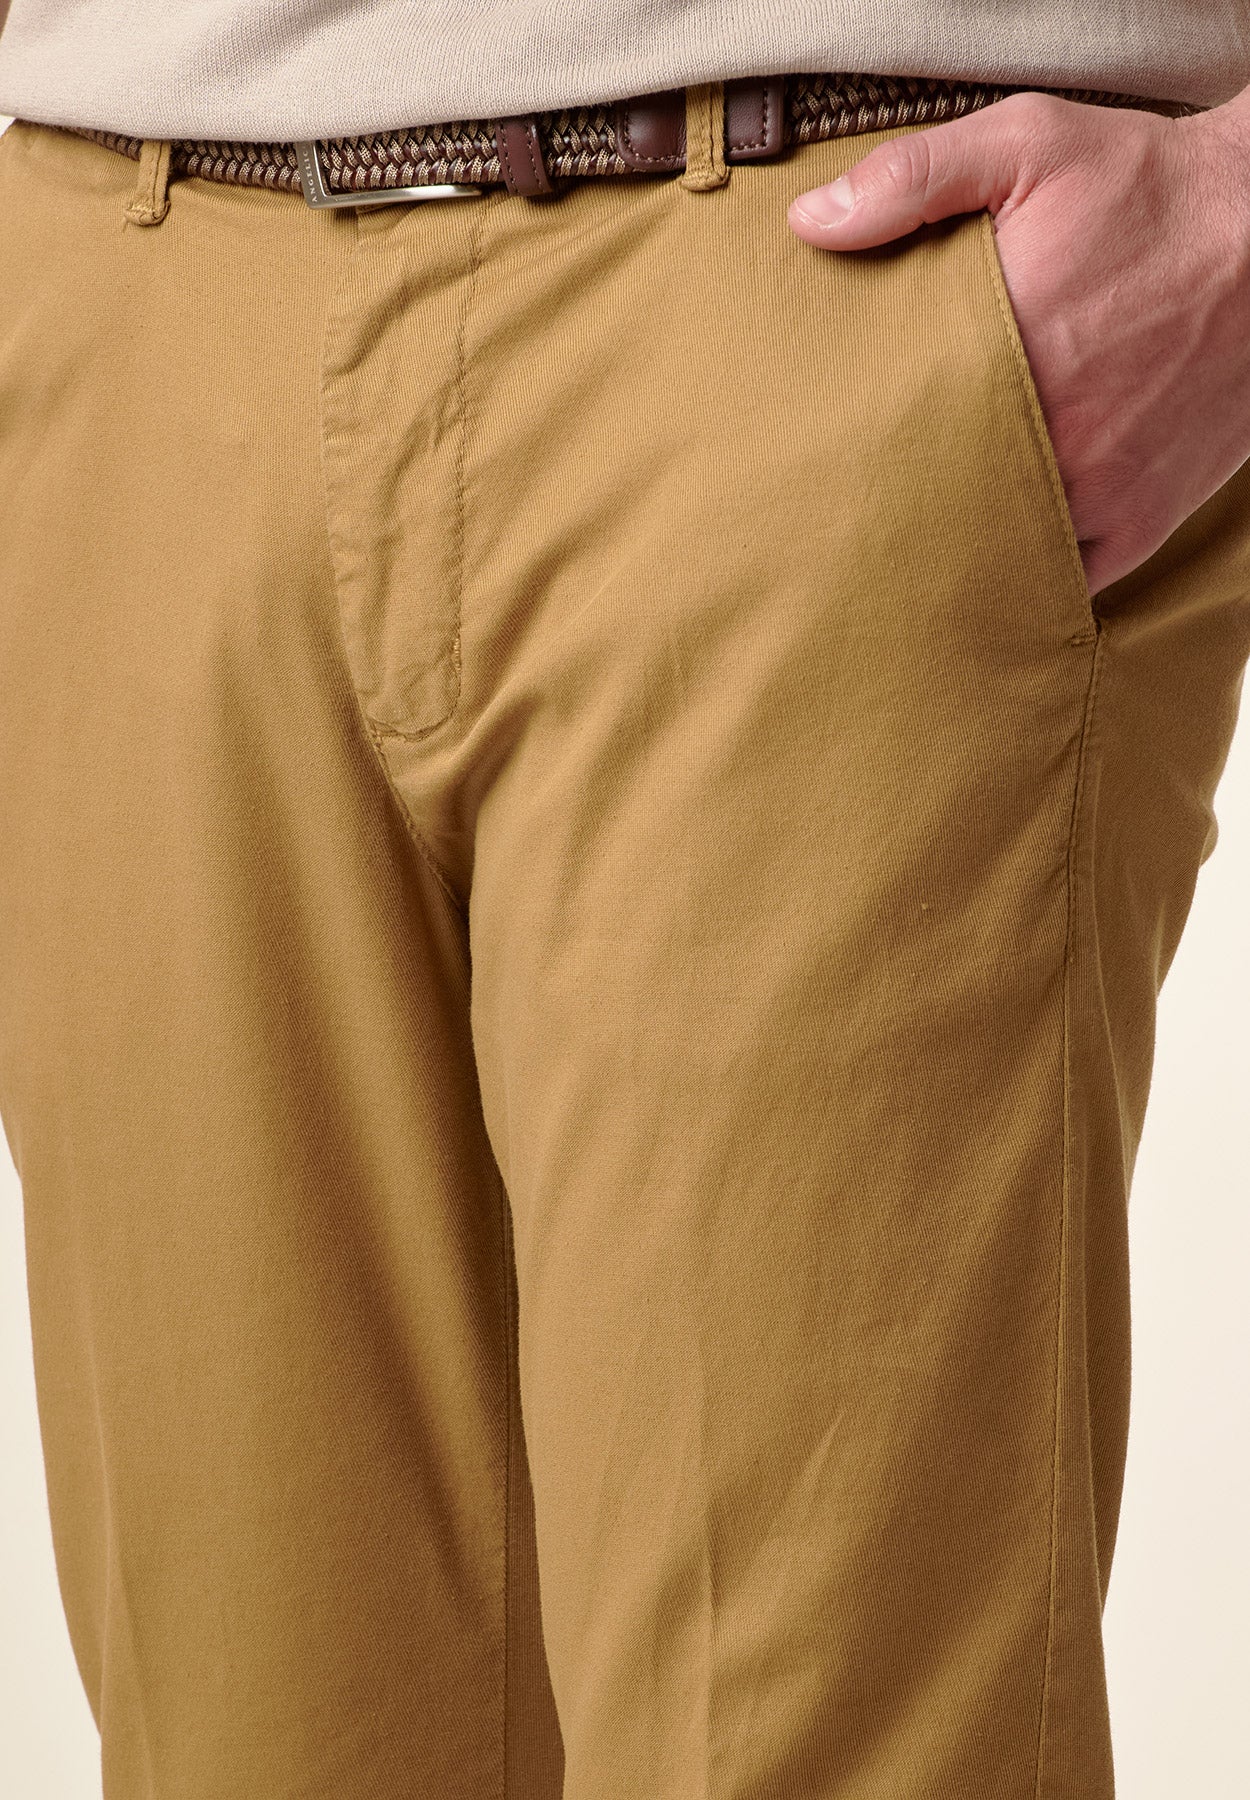 Pantalone senape cotone-lino slim fit